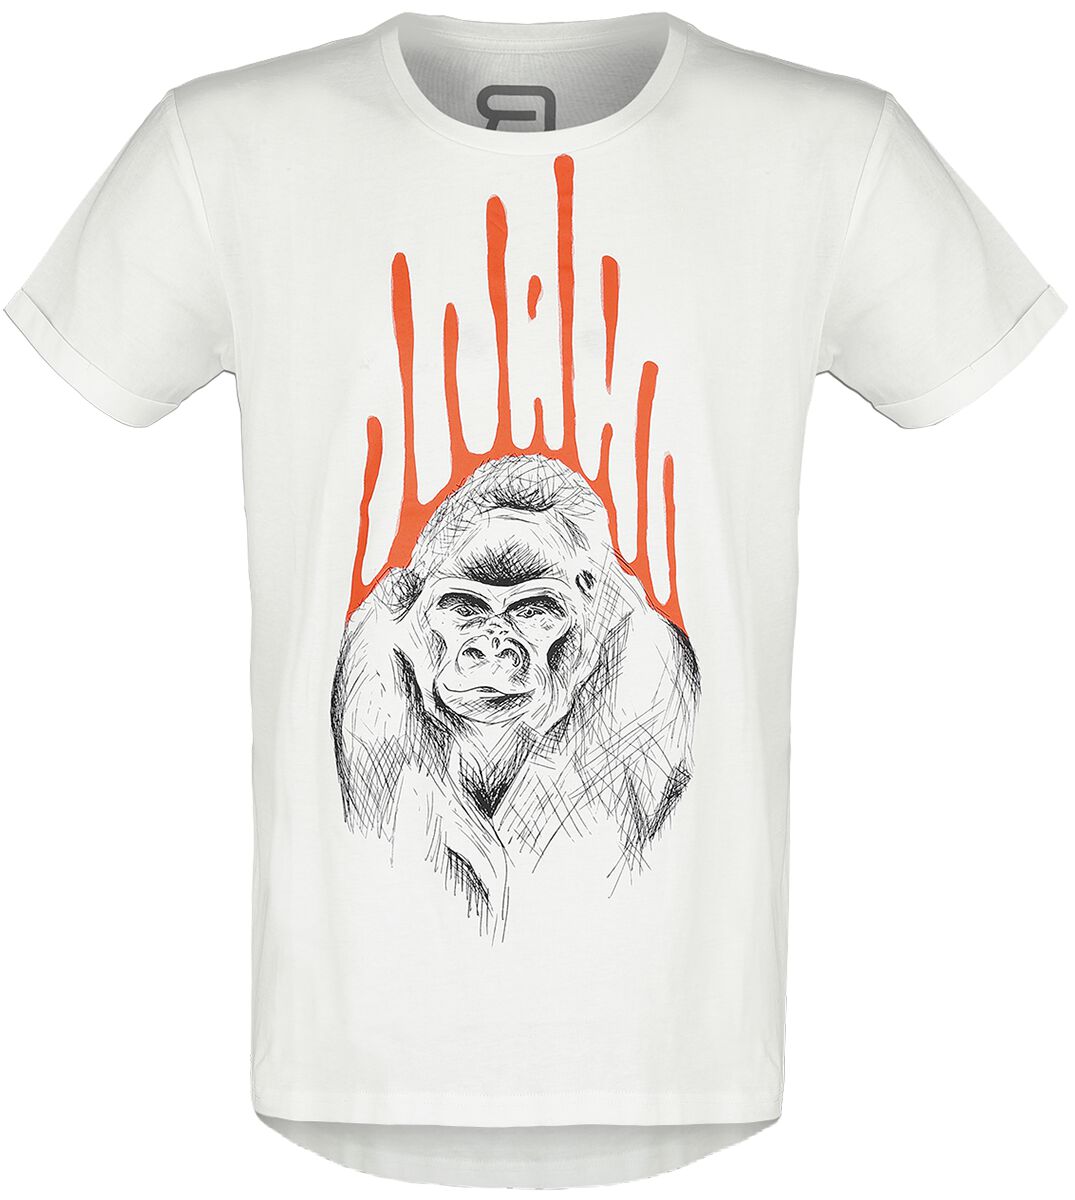 Franje Blaast op gemiddelde T-Shirt with Gorilla Print | R.E.D. by EMP T-shirt | Large